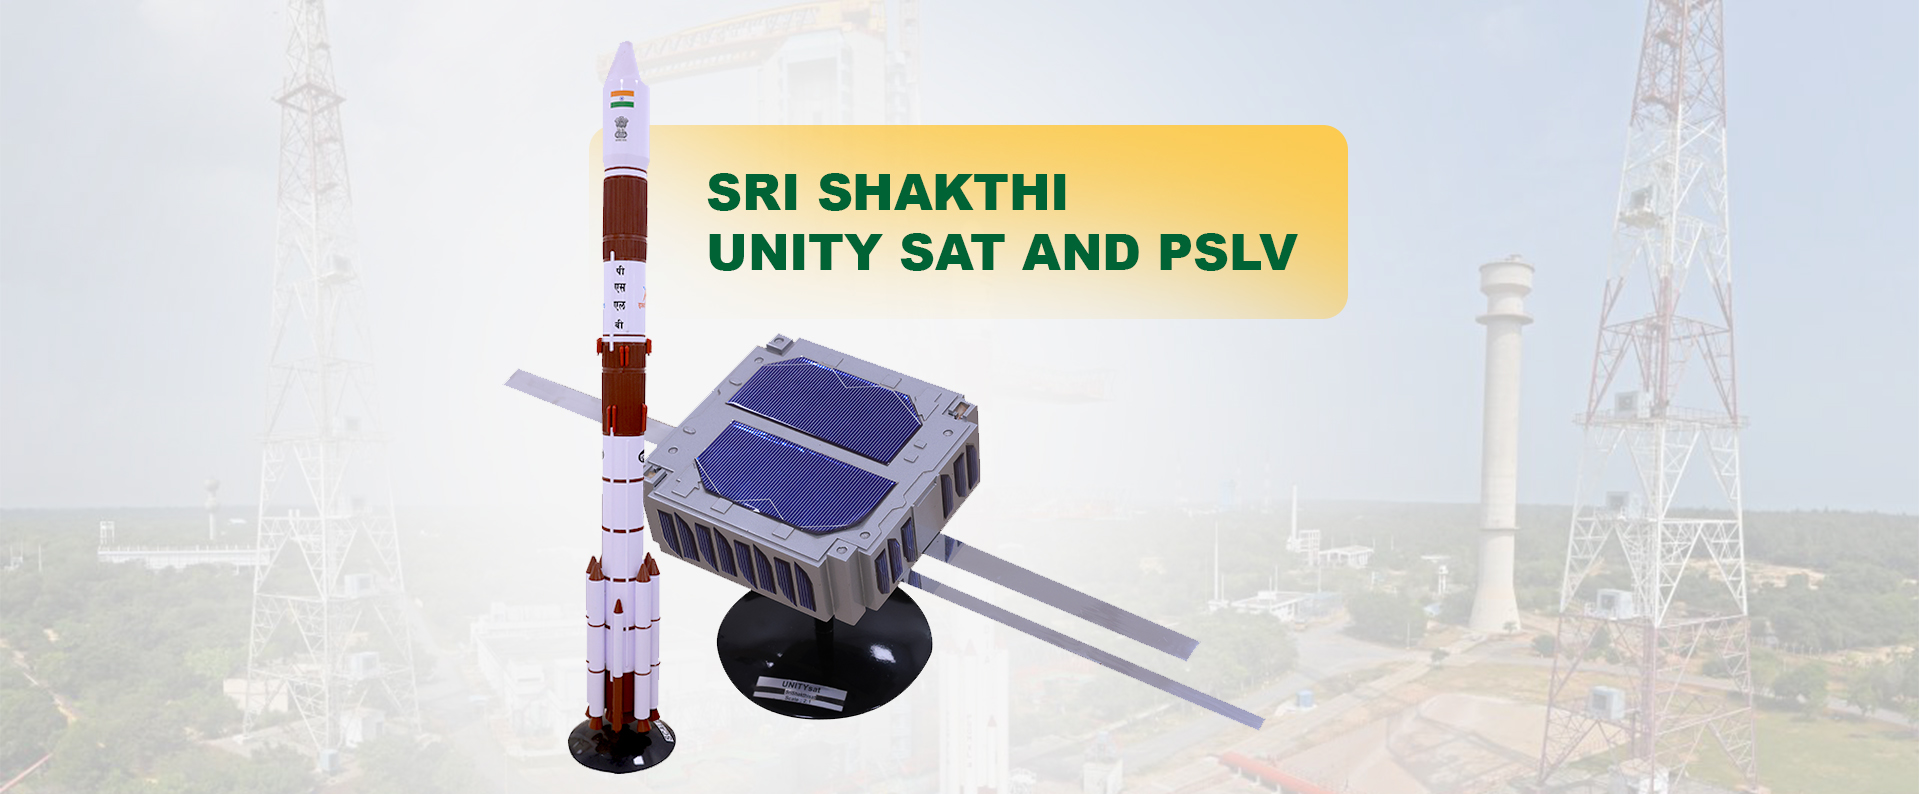 Sri Shakthi Unity SAT and PSLV